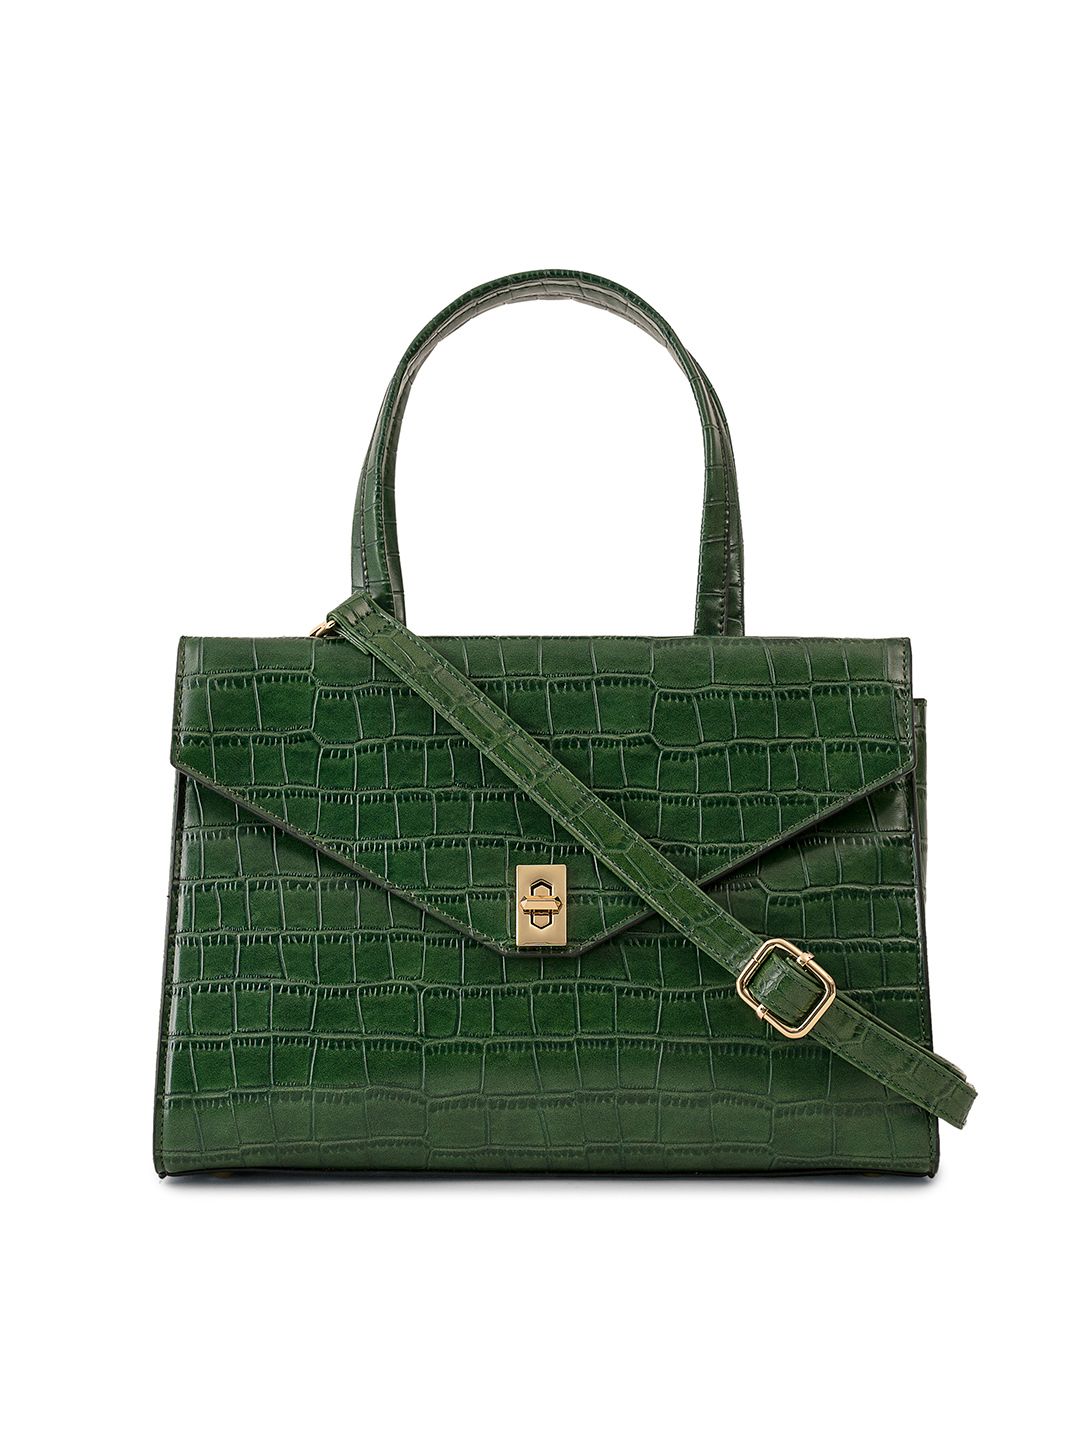 MIRAGGIO Green Textured Structured Satchel Handbags Price in India